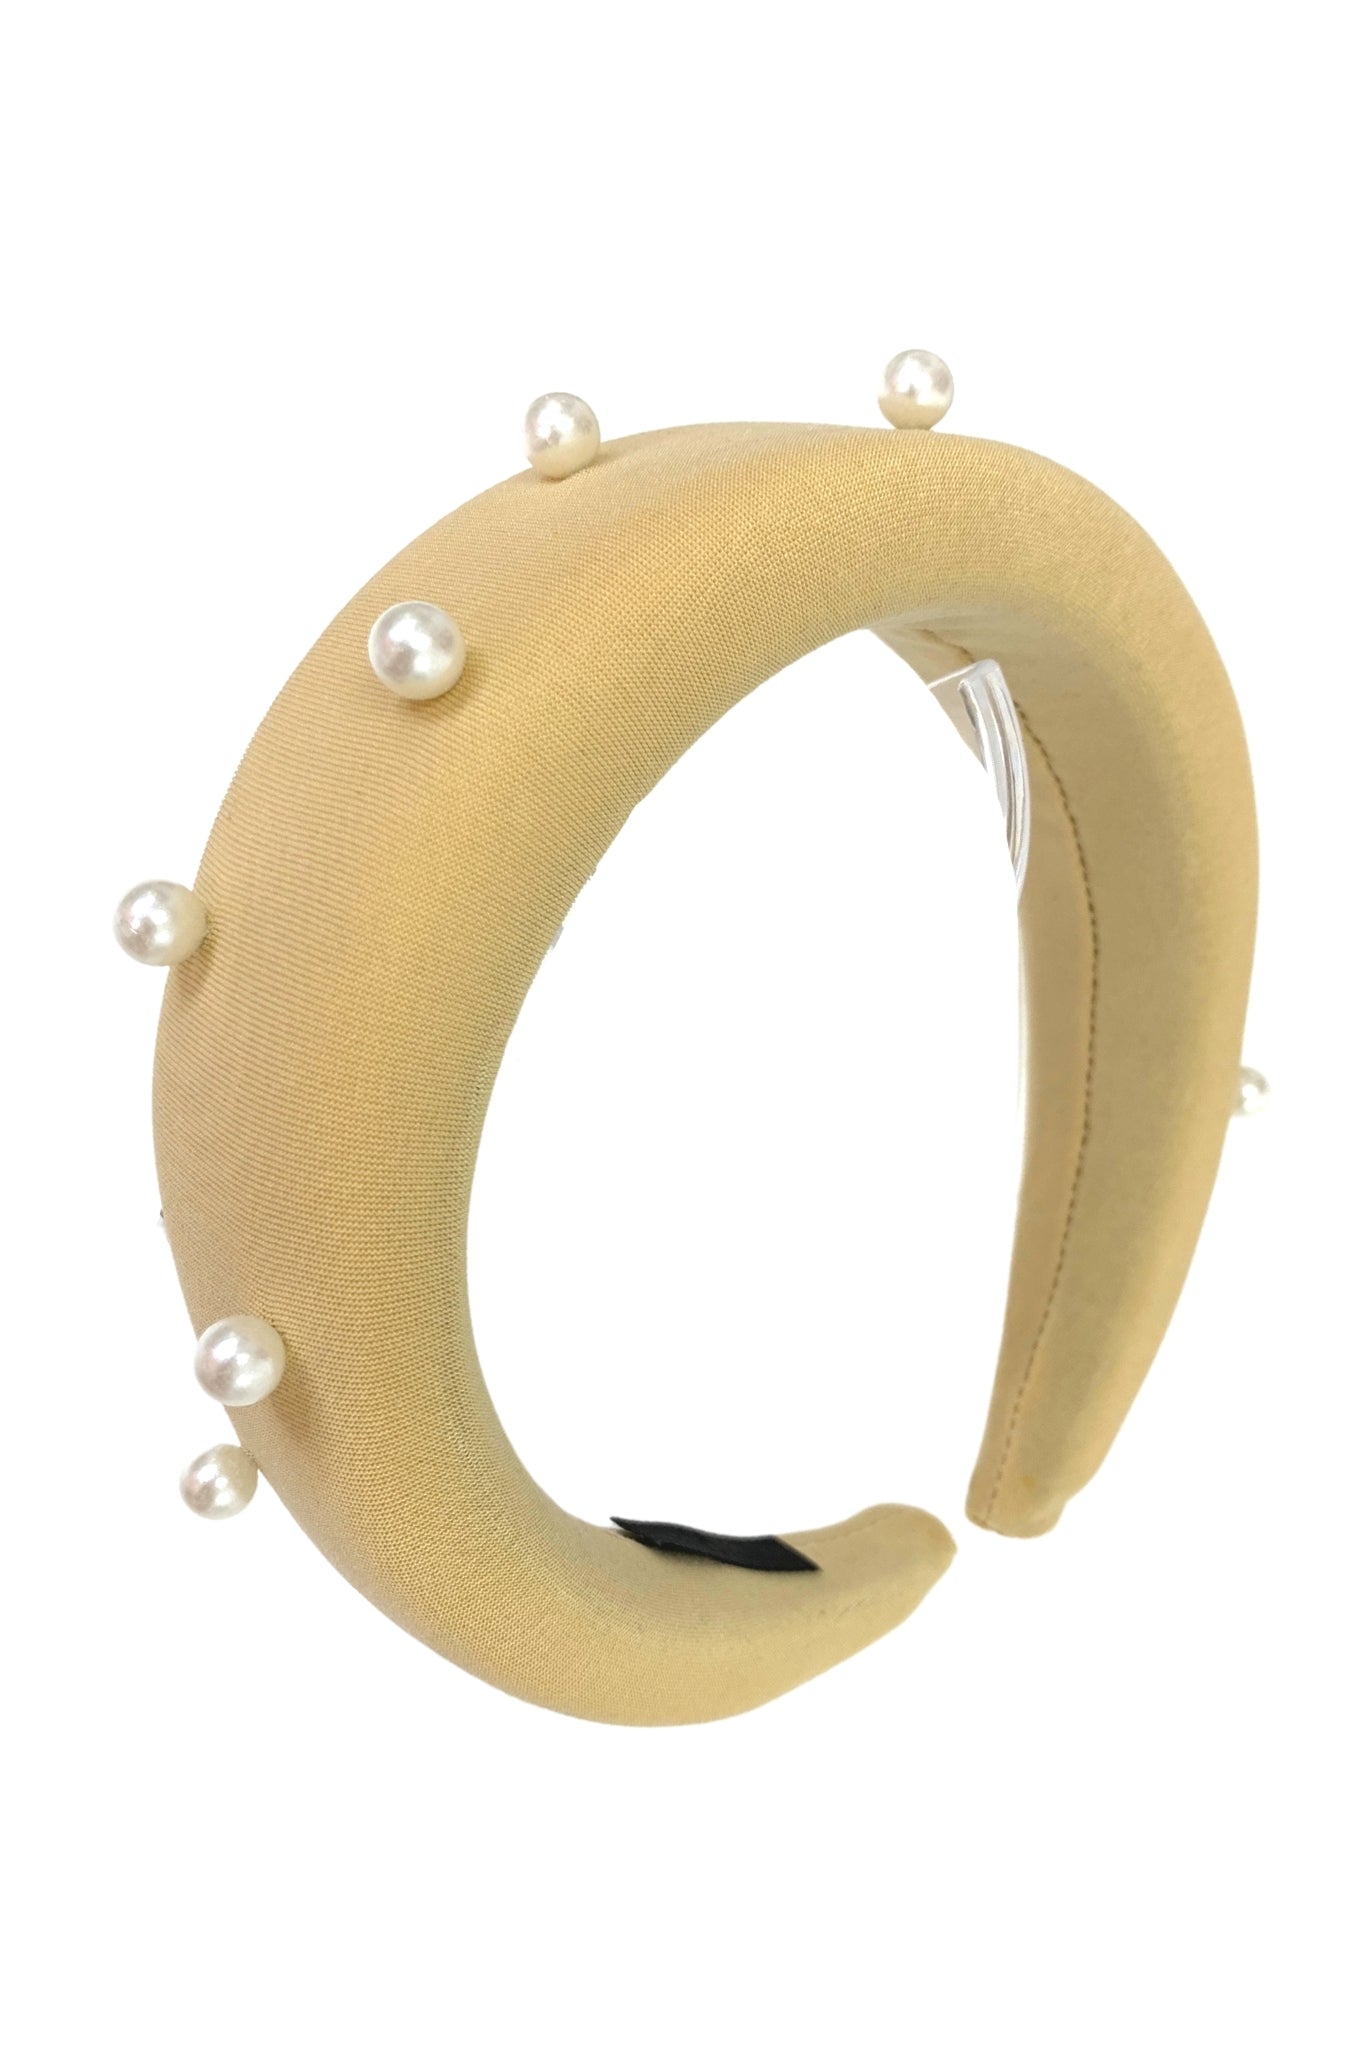 Nude Pearl Headband*FINAL SALE*